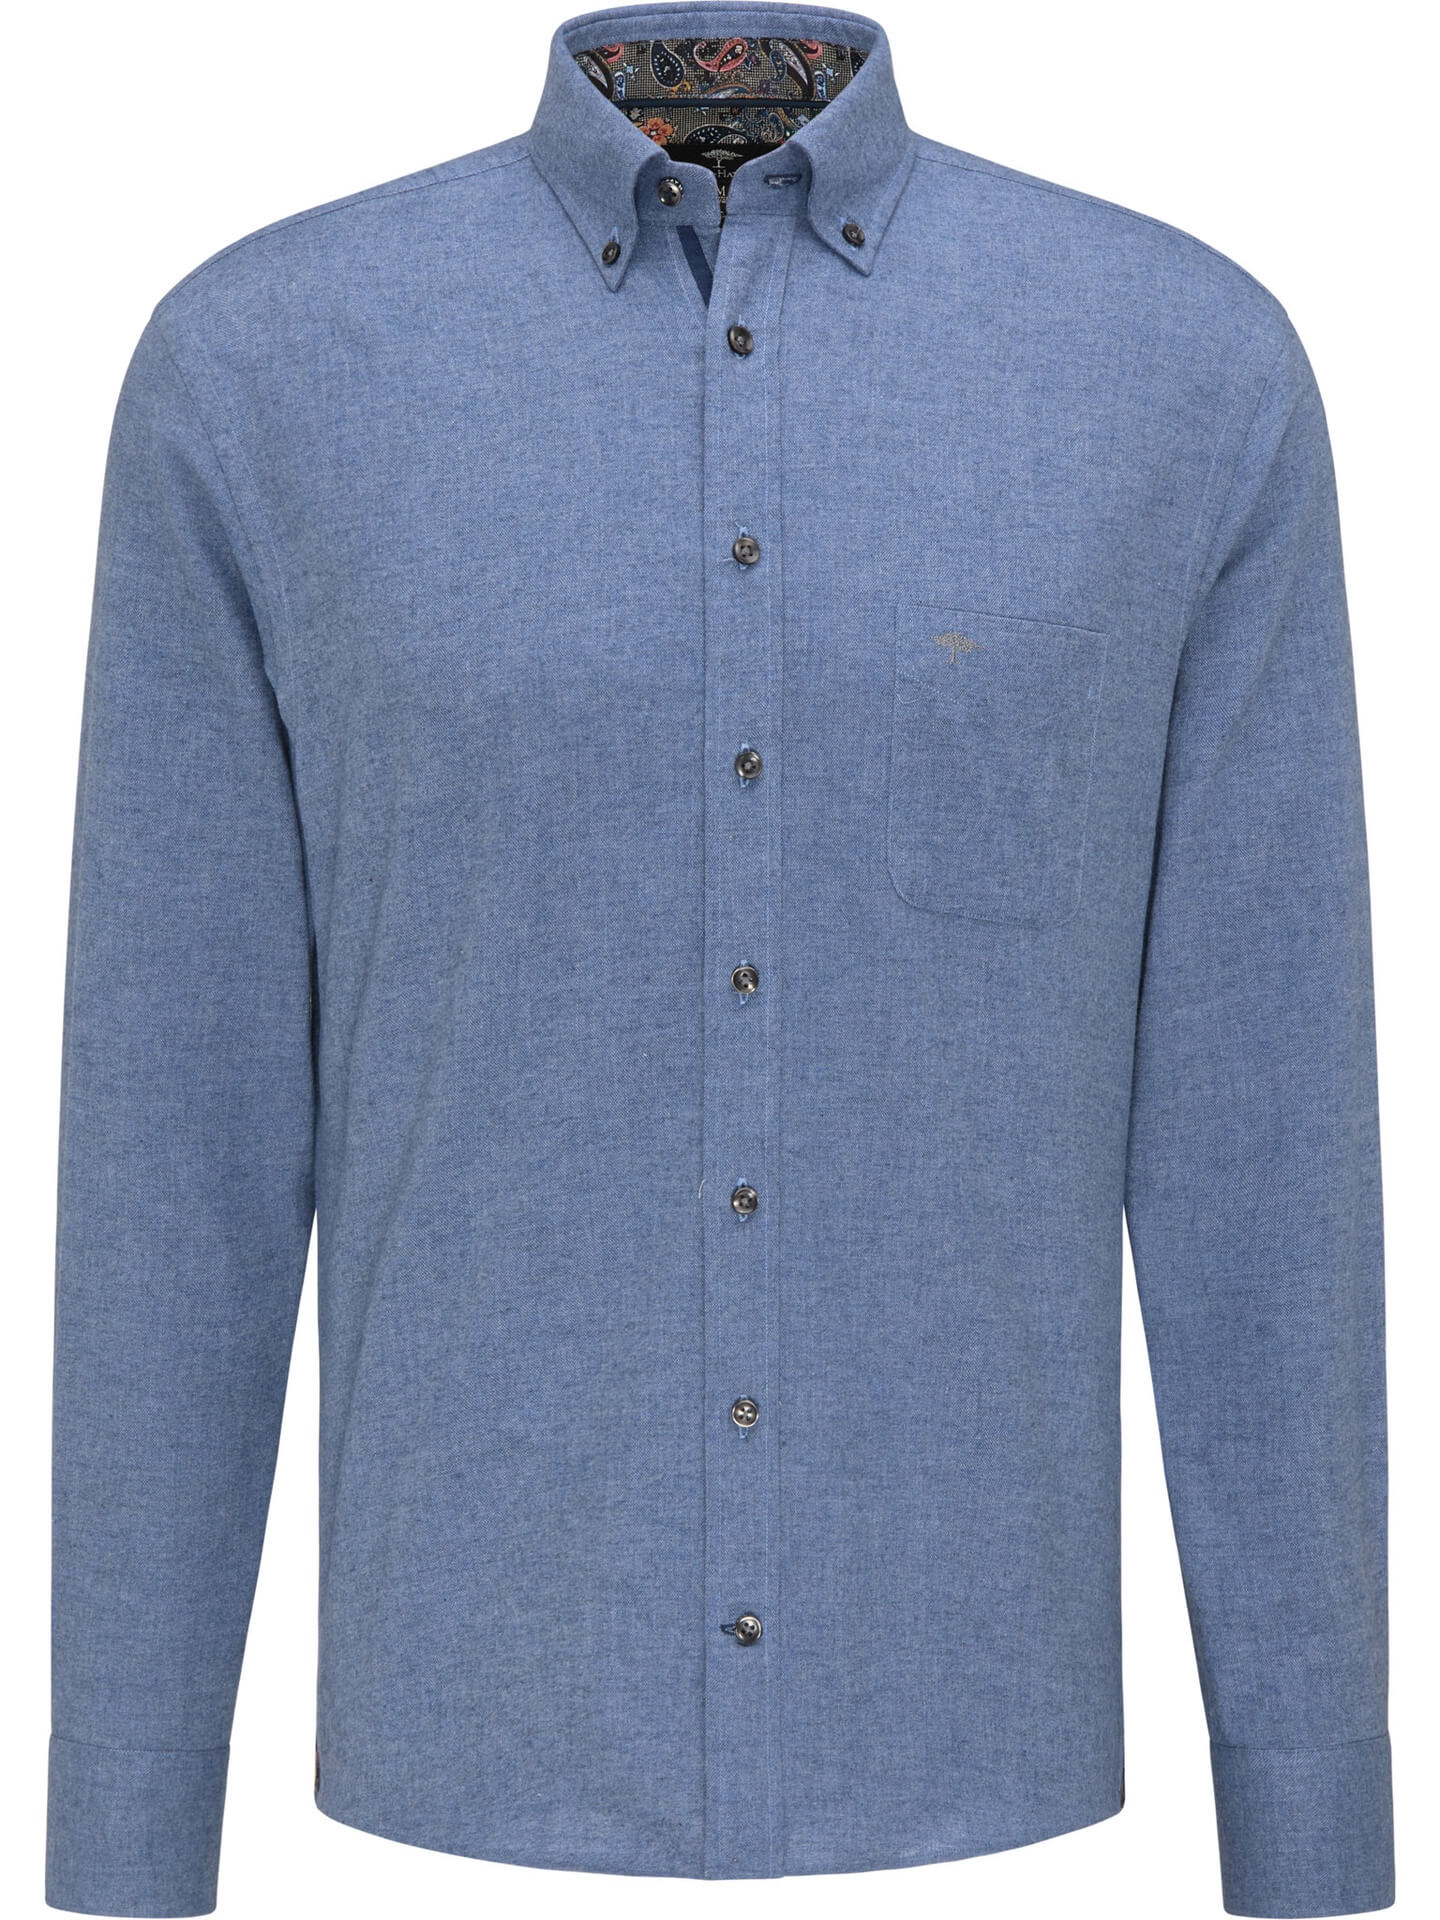 Fynch Hatton Flannel Shirt in Blue